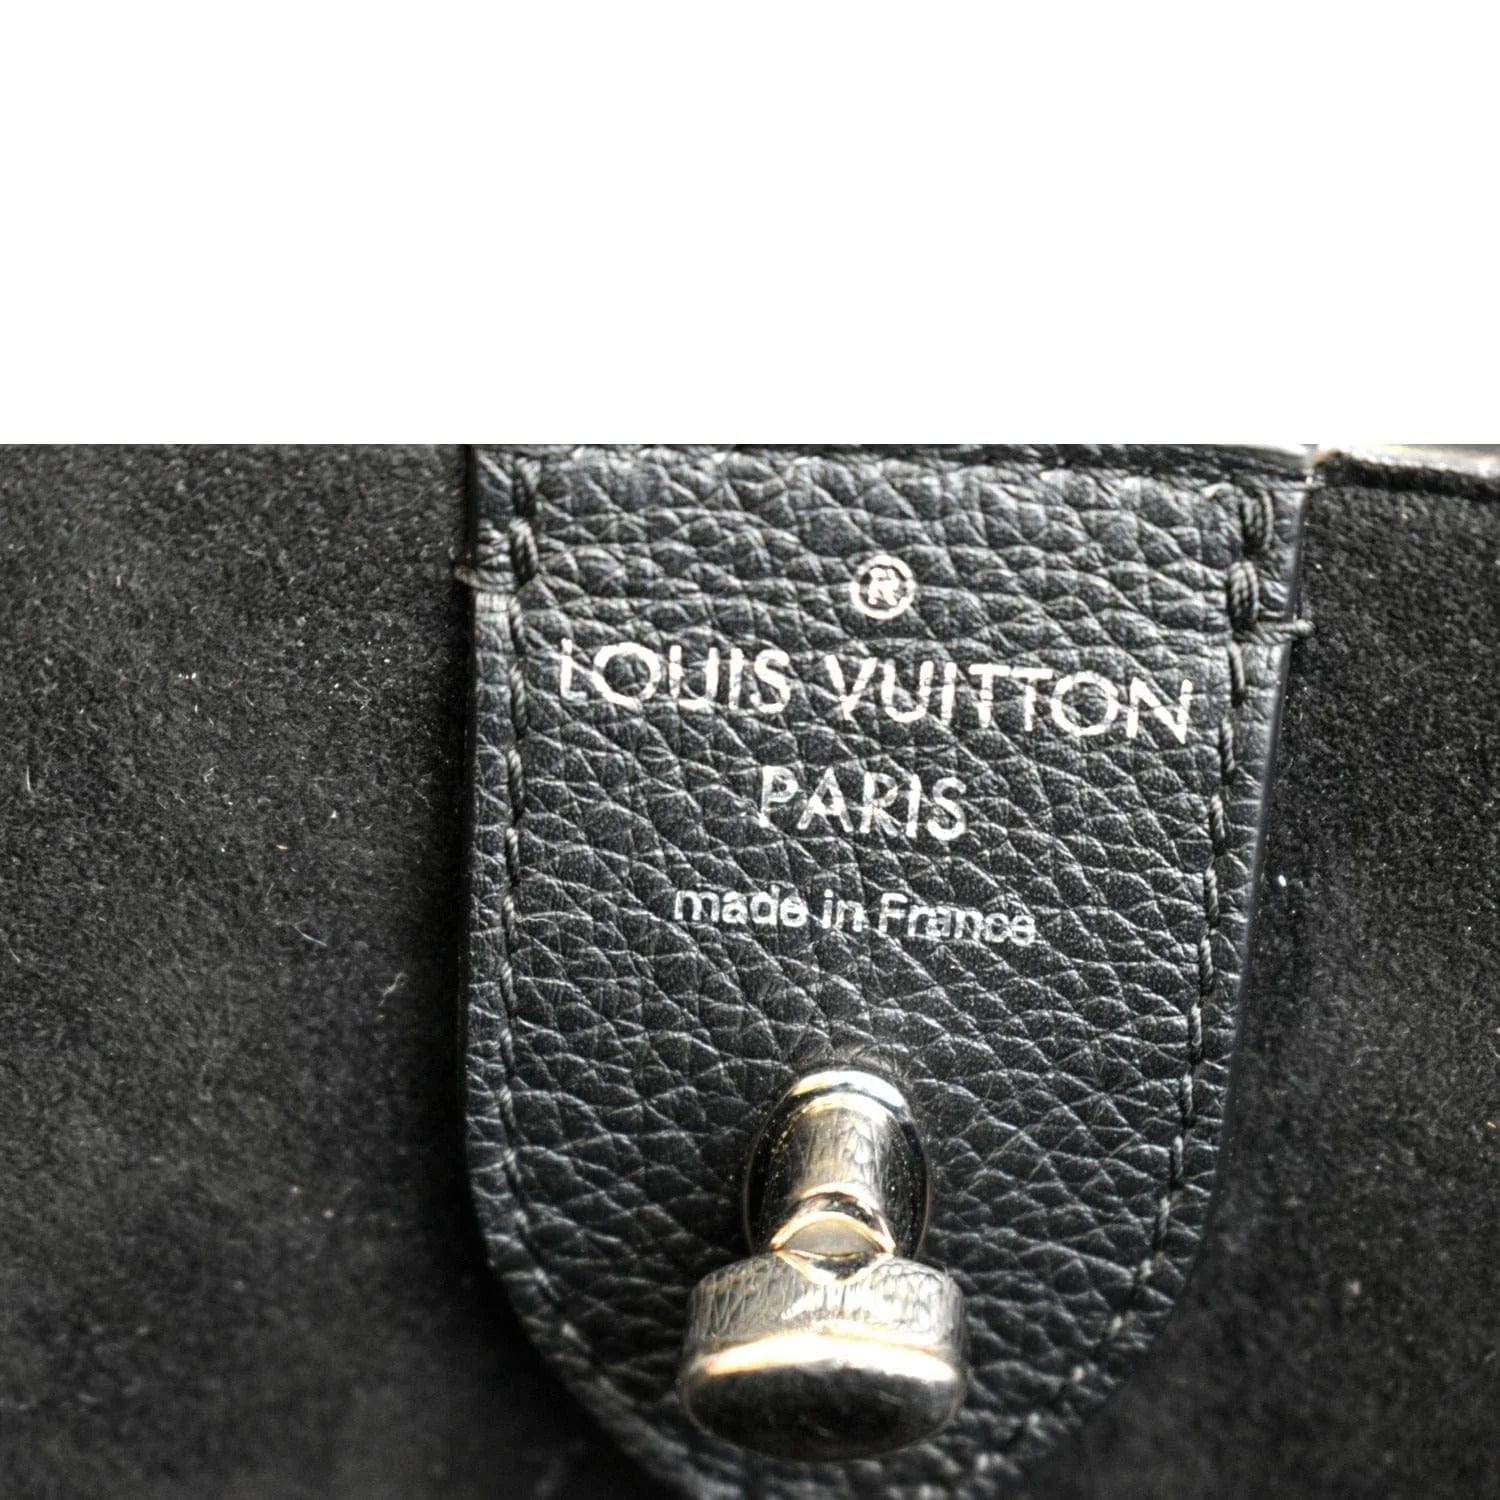 Louis Vuitton Lockme Cabas Vs Lockme Go Tote